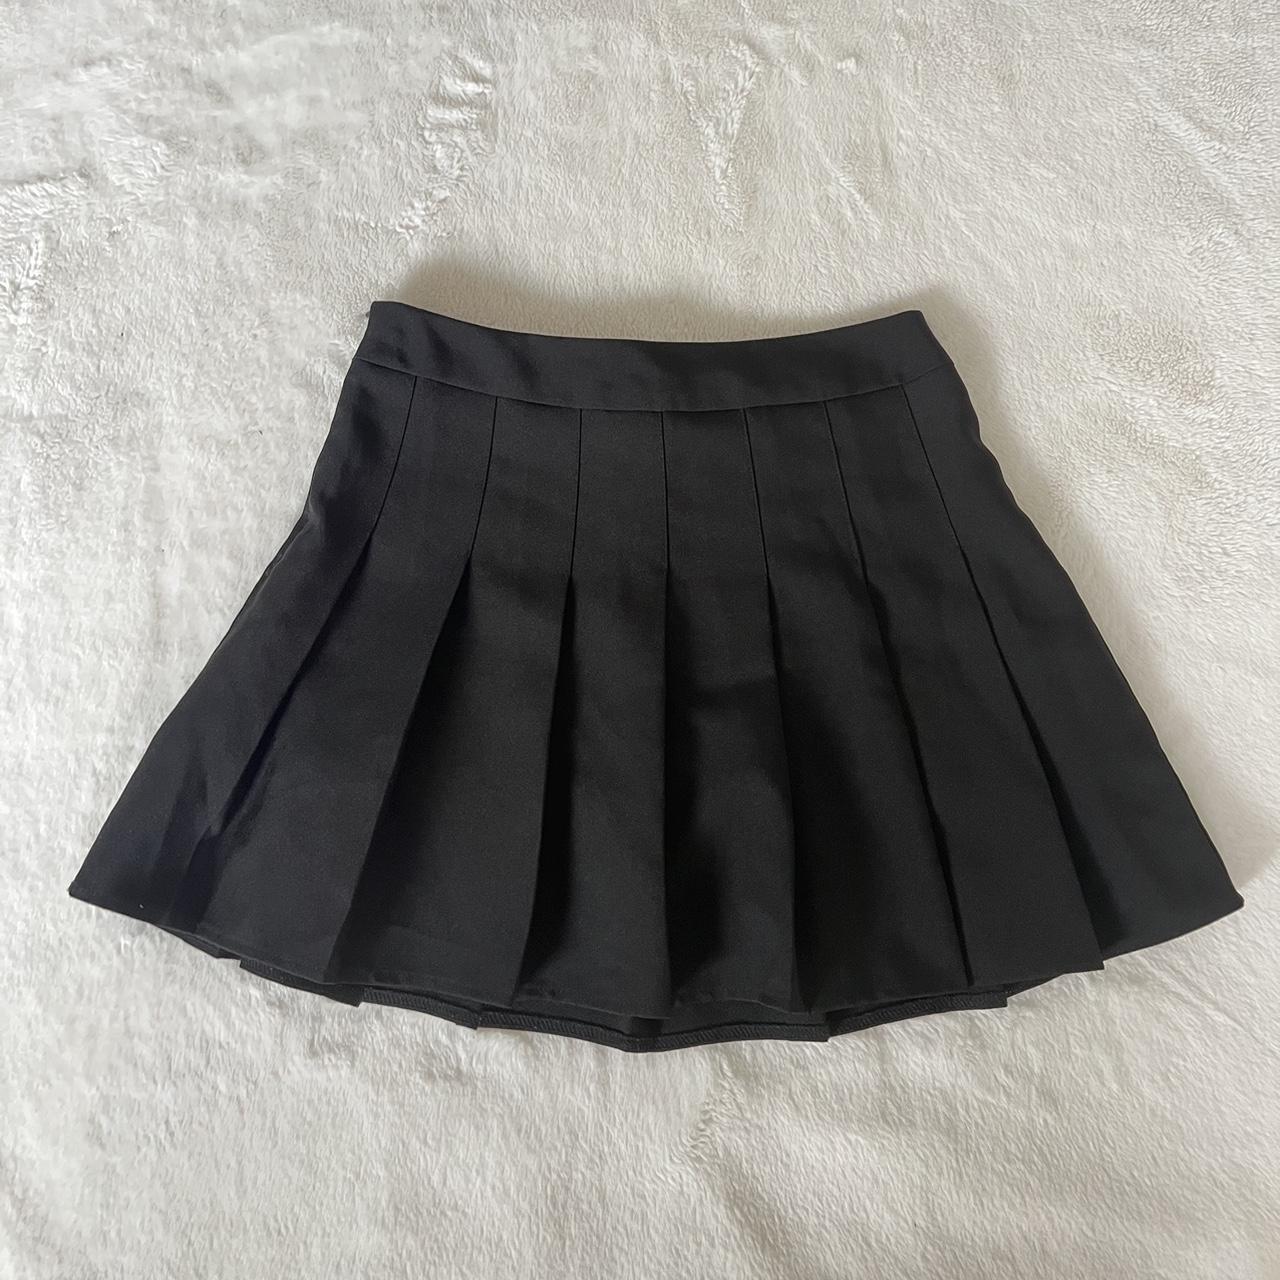 ˚ ʚ black pleated skirt with shorts underneath ɞ... - Depop